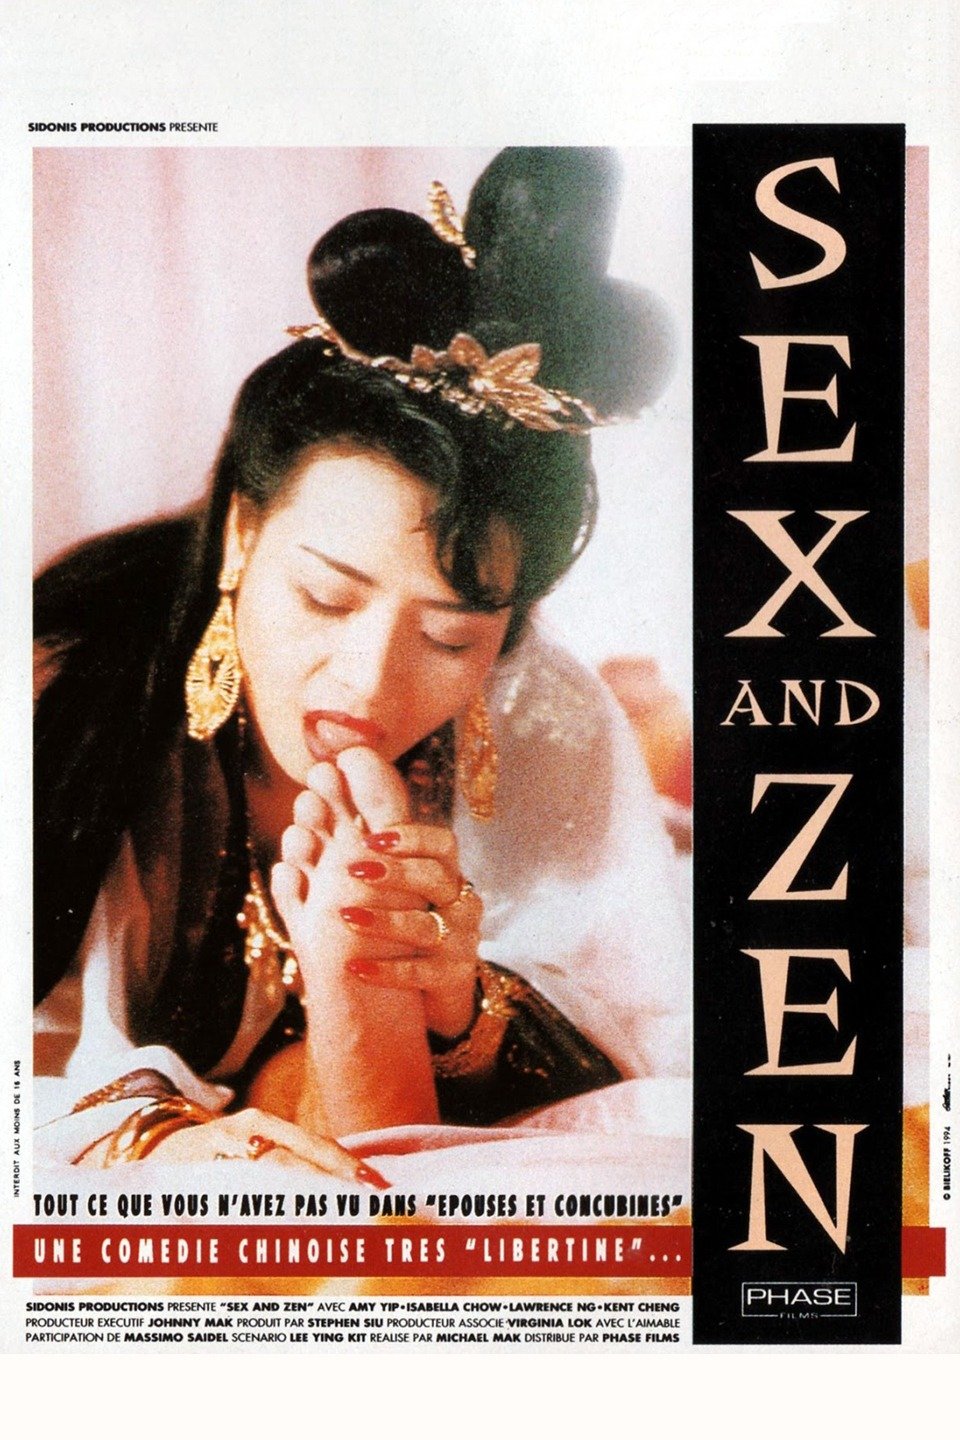 Sex And Zen Full Movie